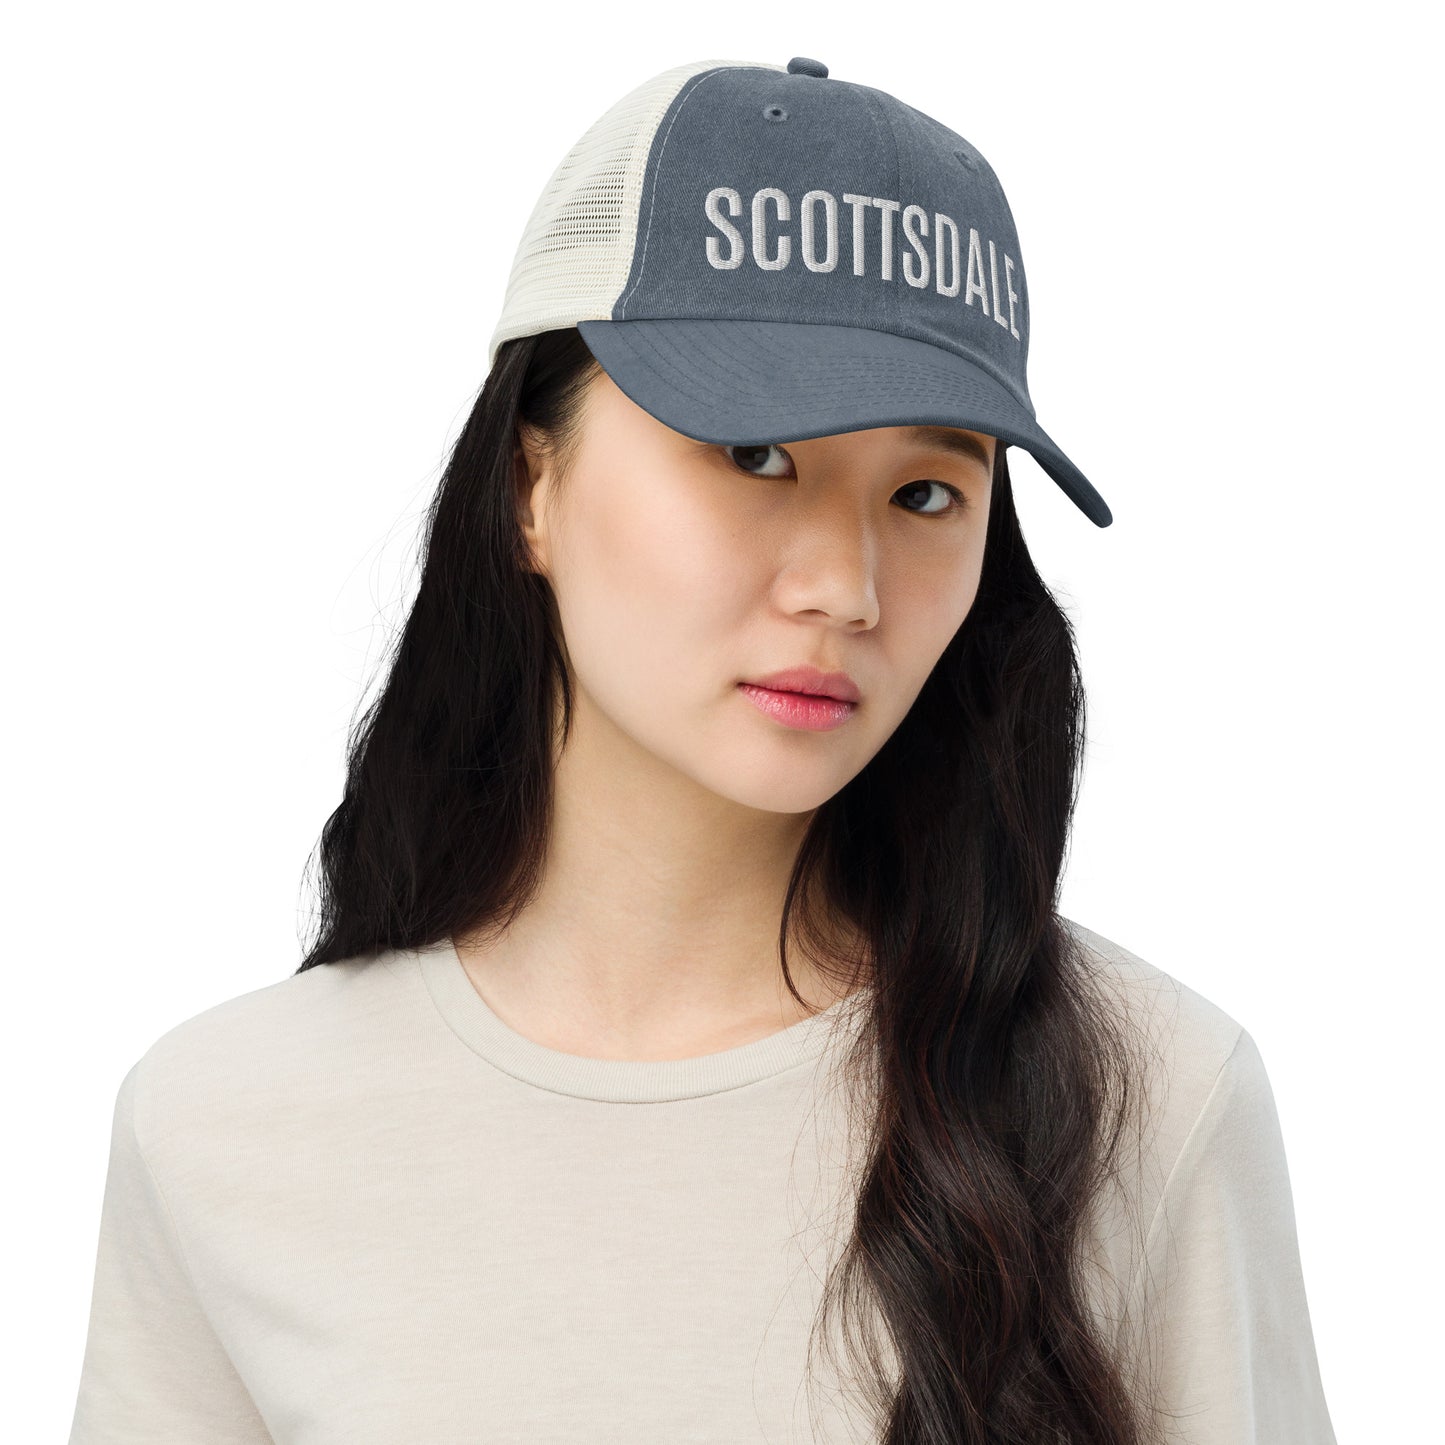 Scottsdale Pigment-dyed cap